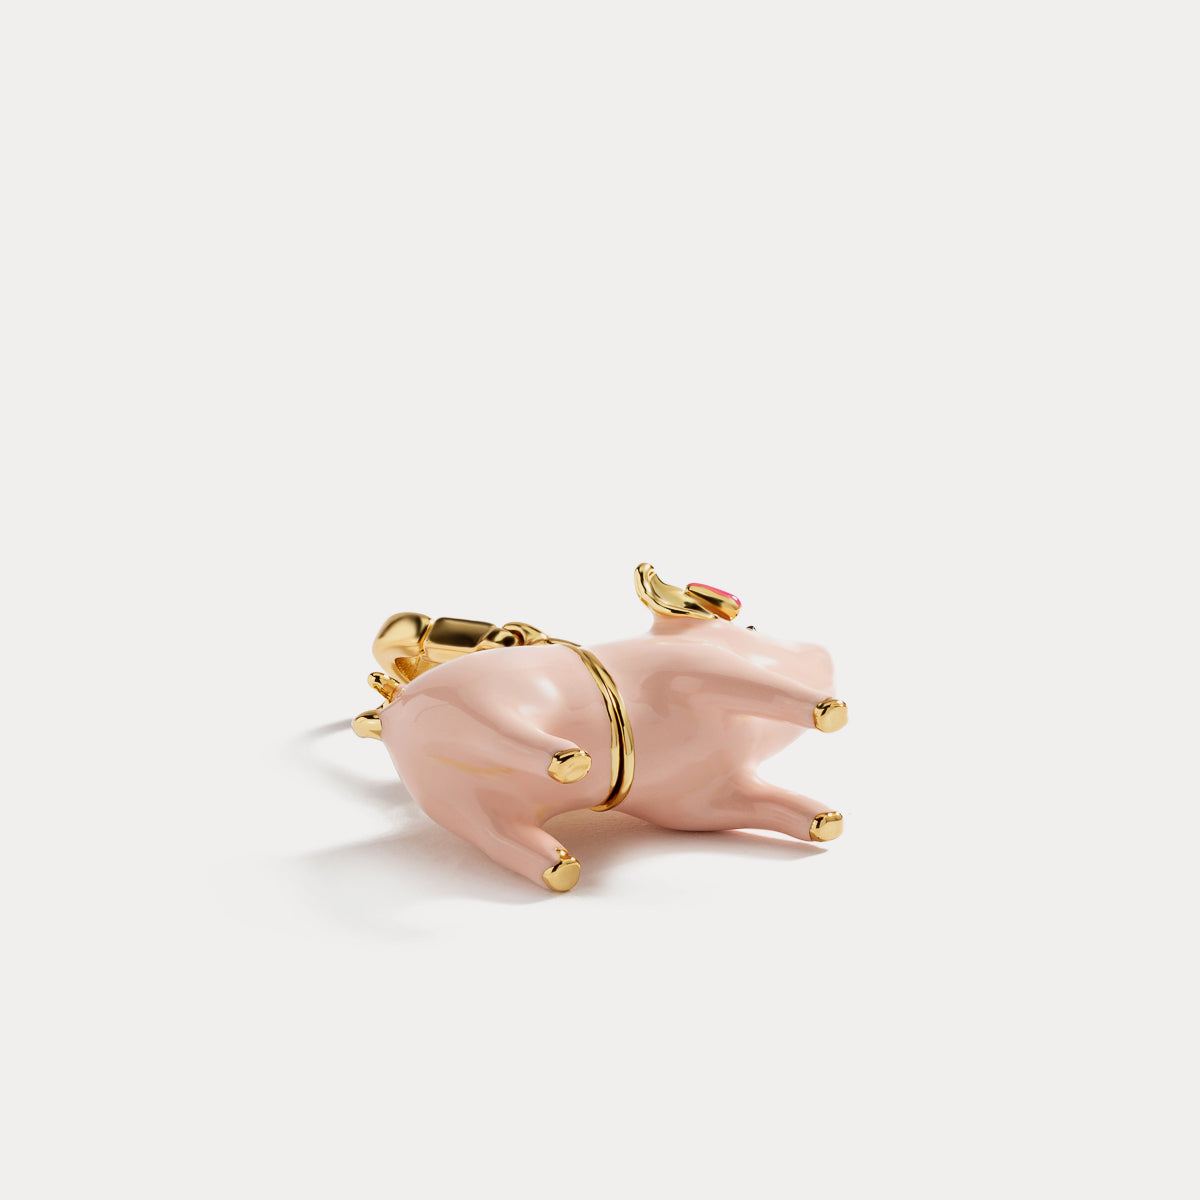 enamel pink pig pendant necklace